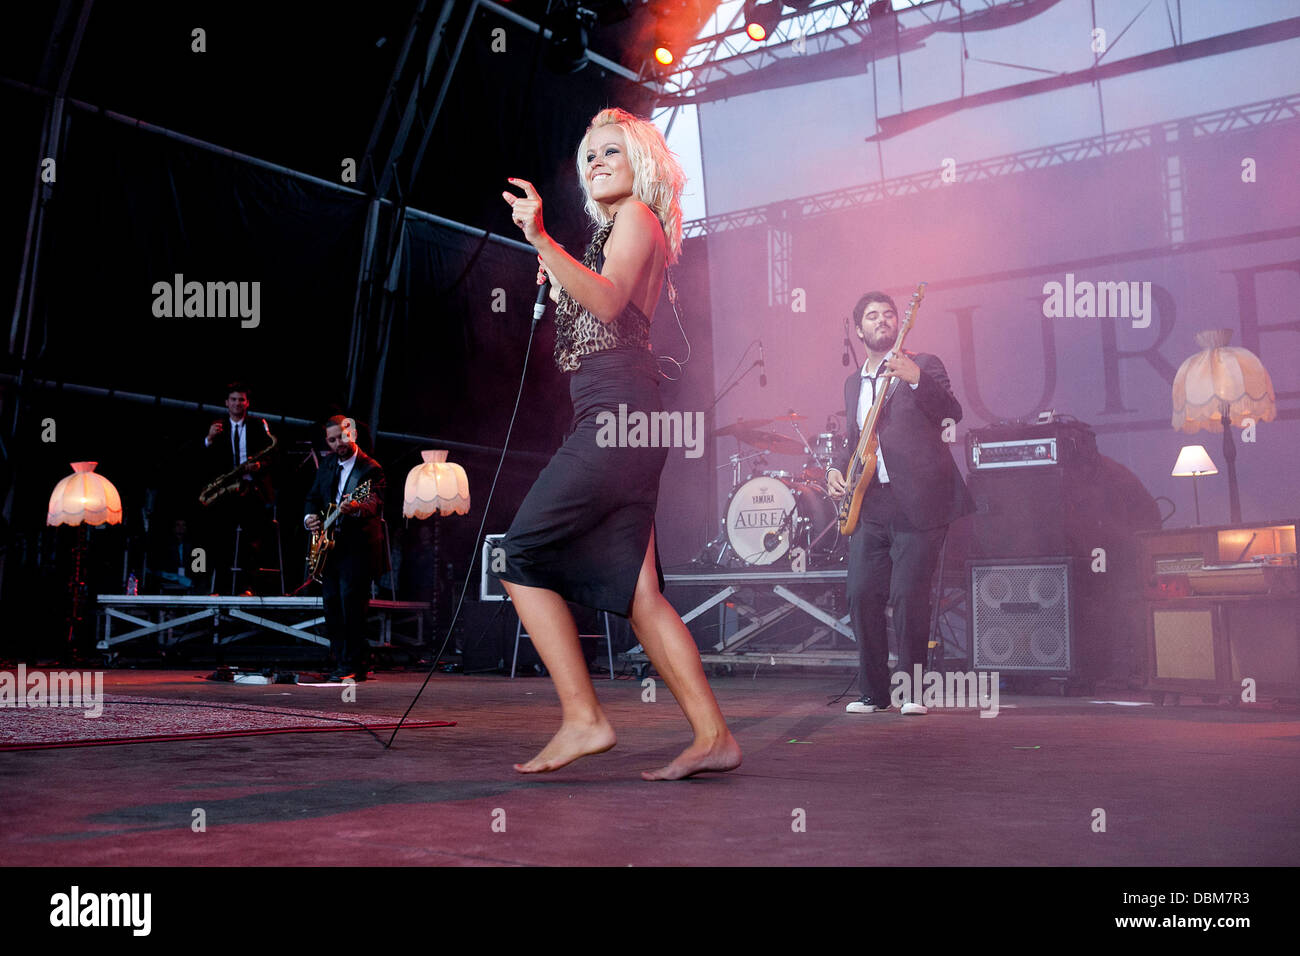 Aurea performing live at Festival Mares Vivas in Gaia - Day 3. Porto, Portugal - 16.07.11 Stock Photo